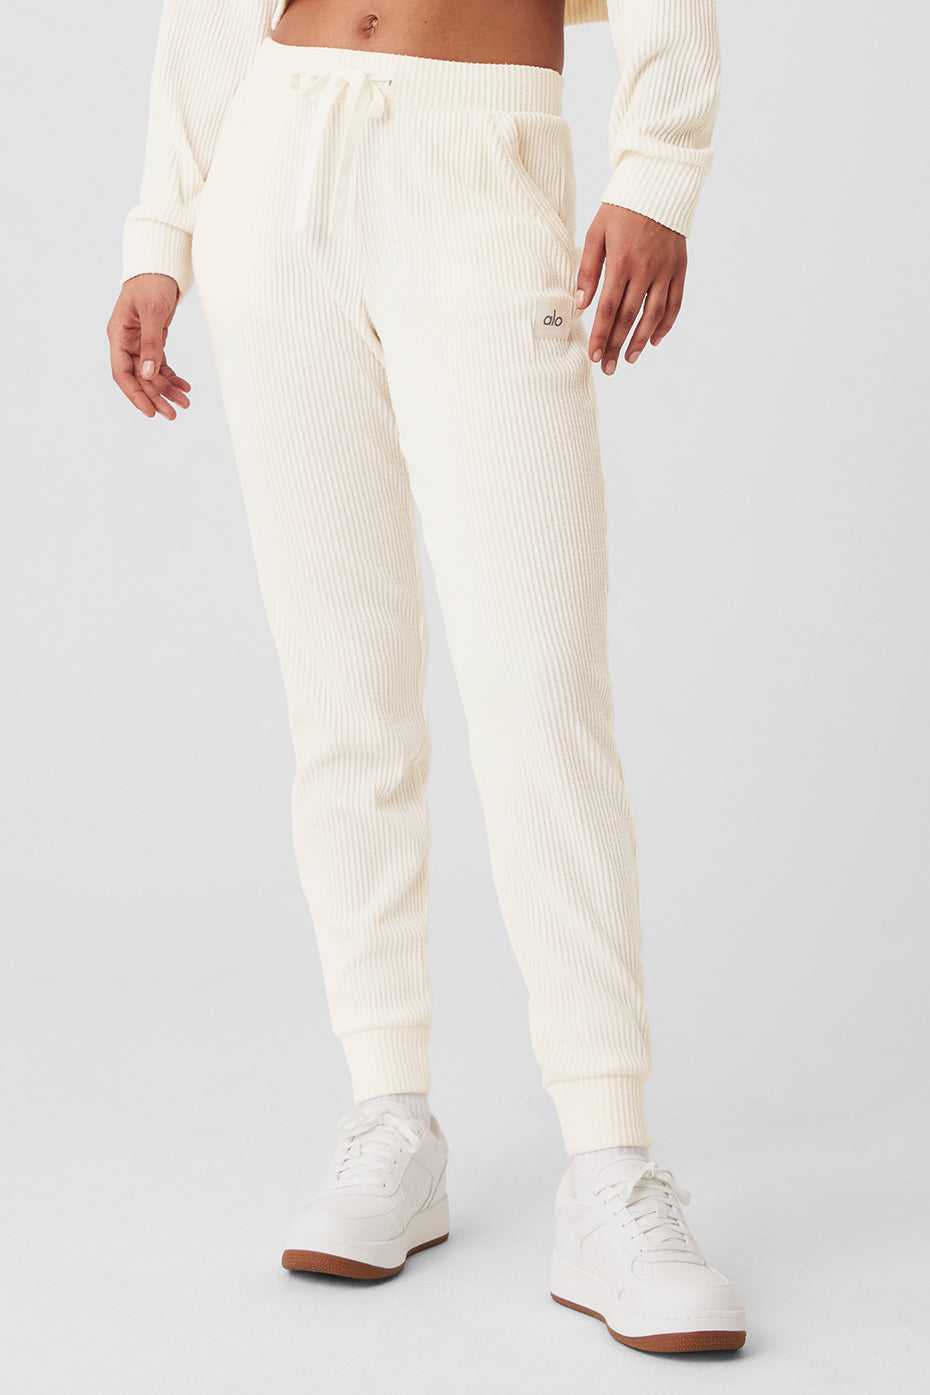 Alo Yoga® | Muse Sweatpant in Ivory White, Size: XS